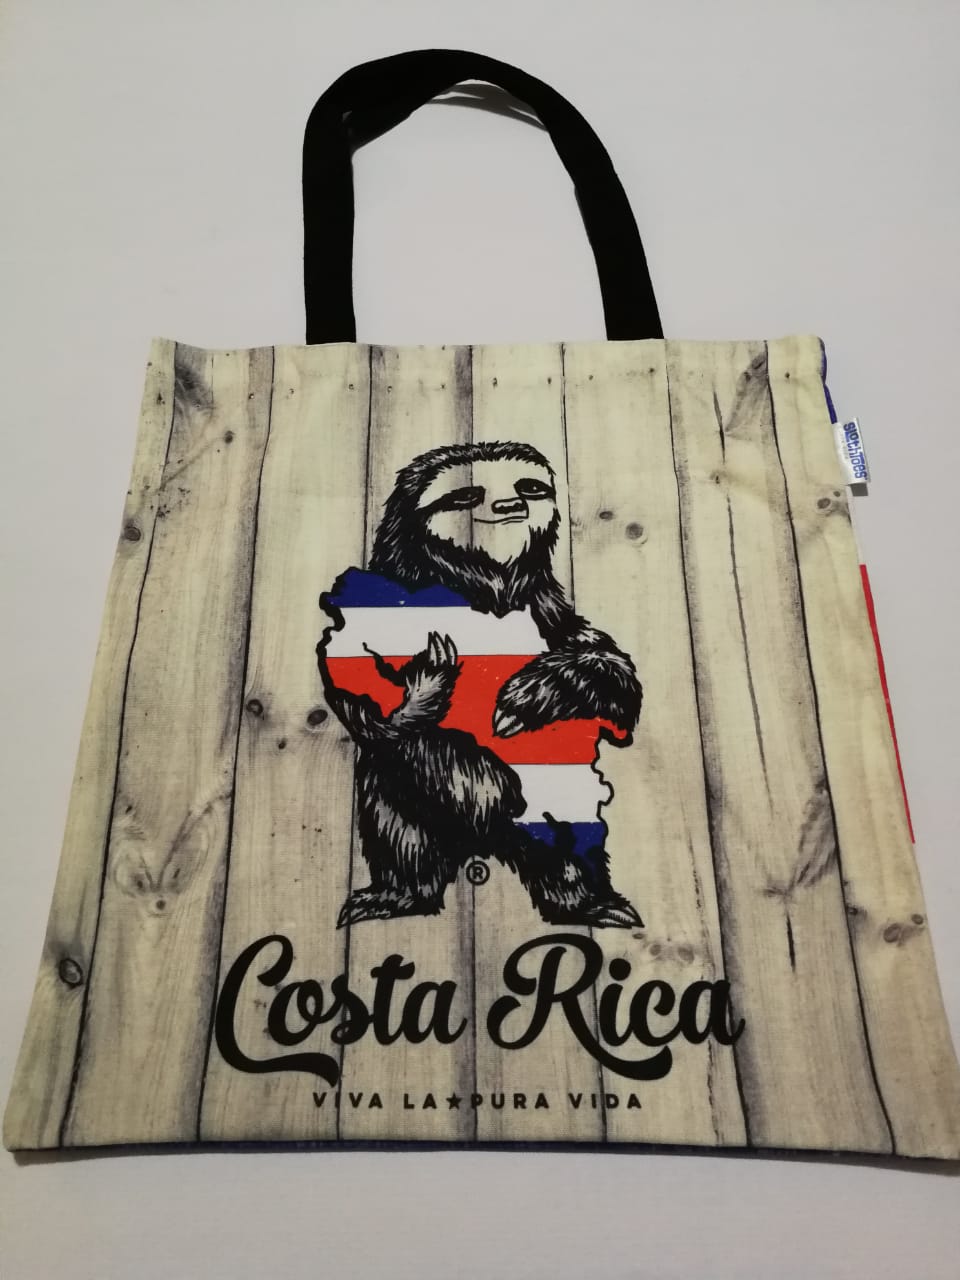 Viva Costa Rica  Tote Bag